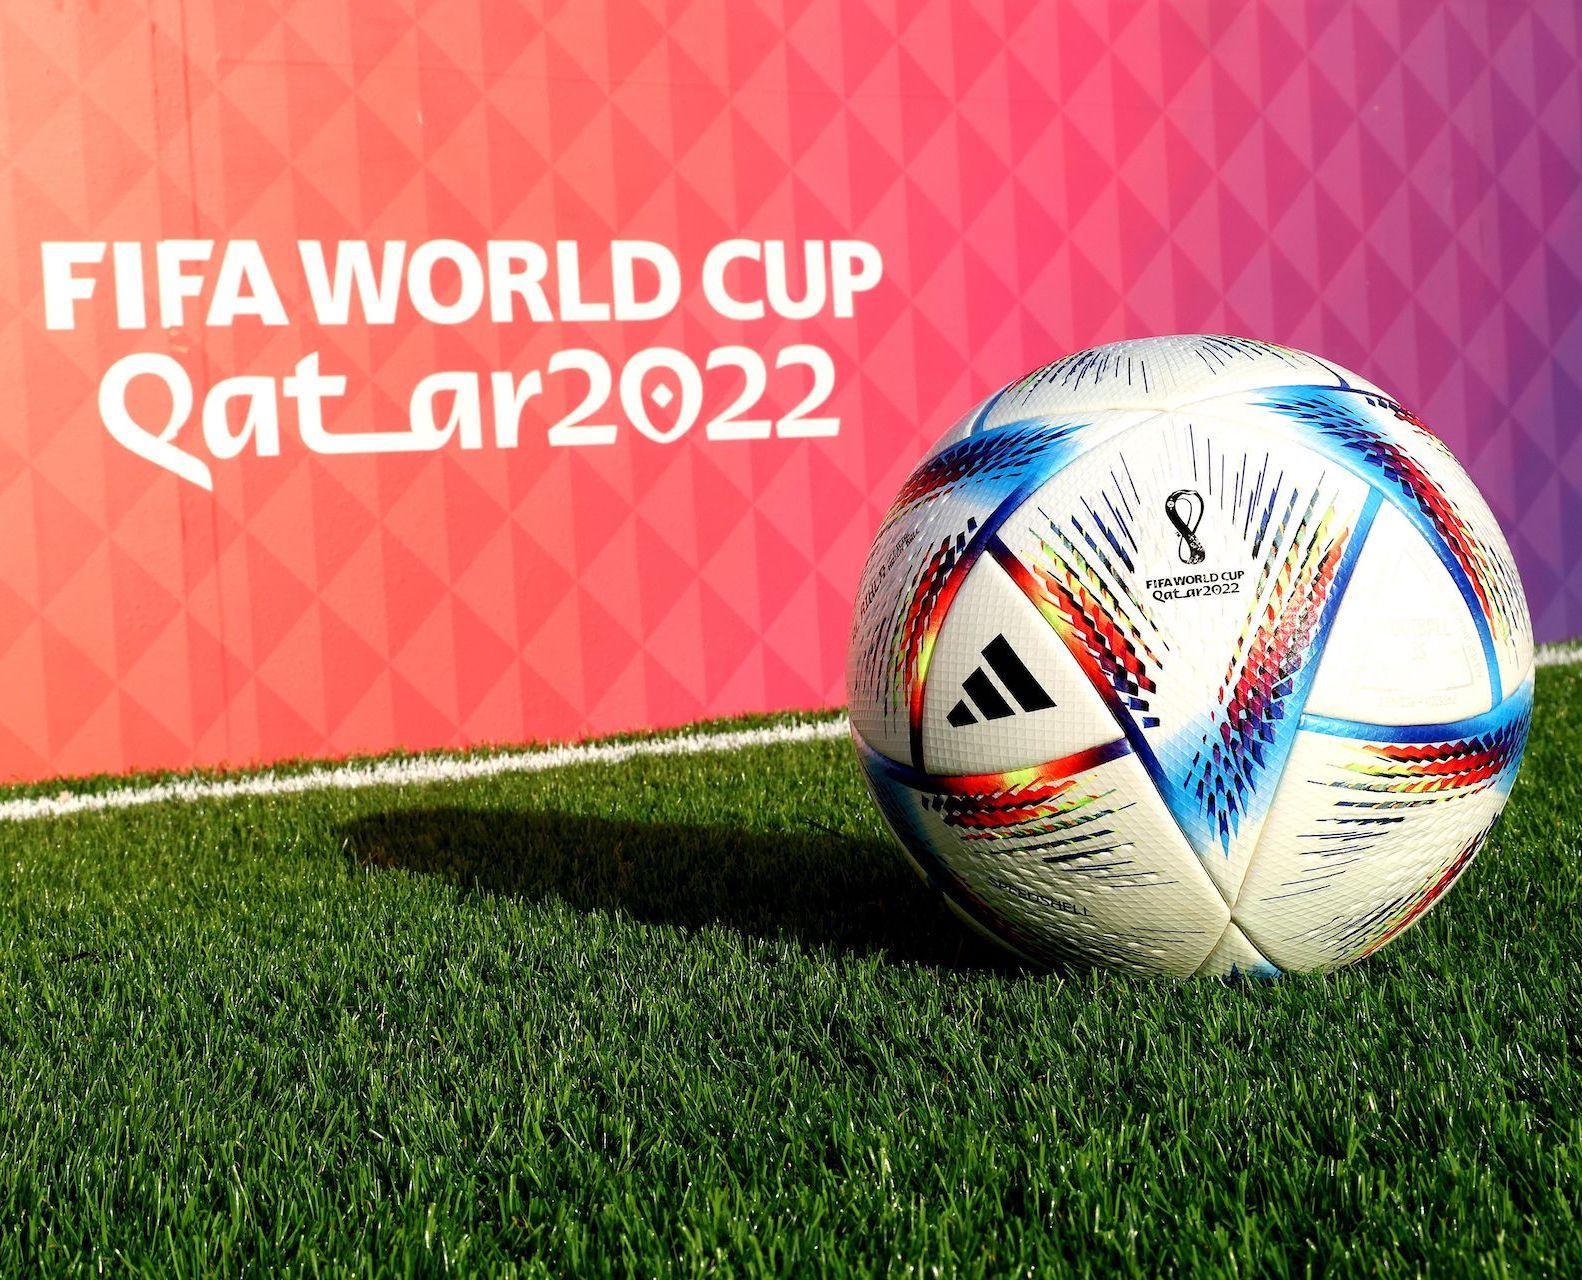 Croatia playing for 2022 FIFA World Cup draw seeding in Qatar | Croatia Week